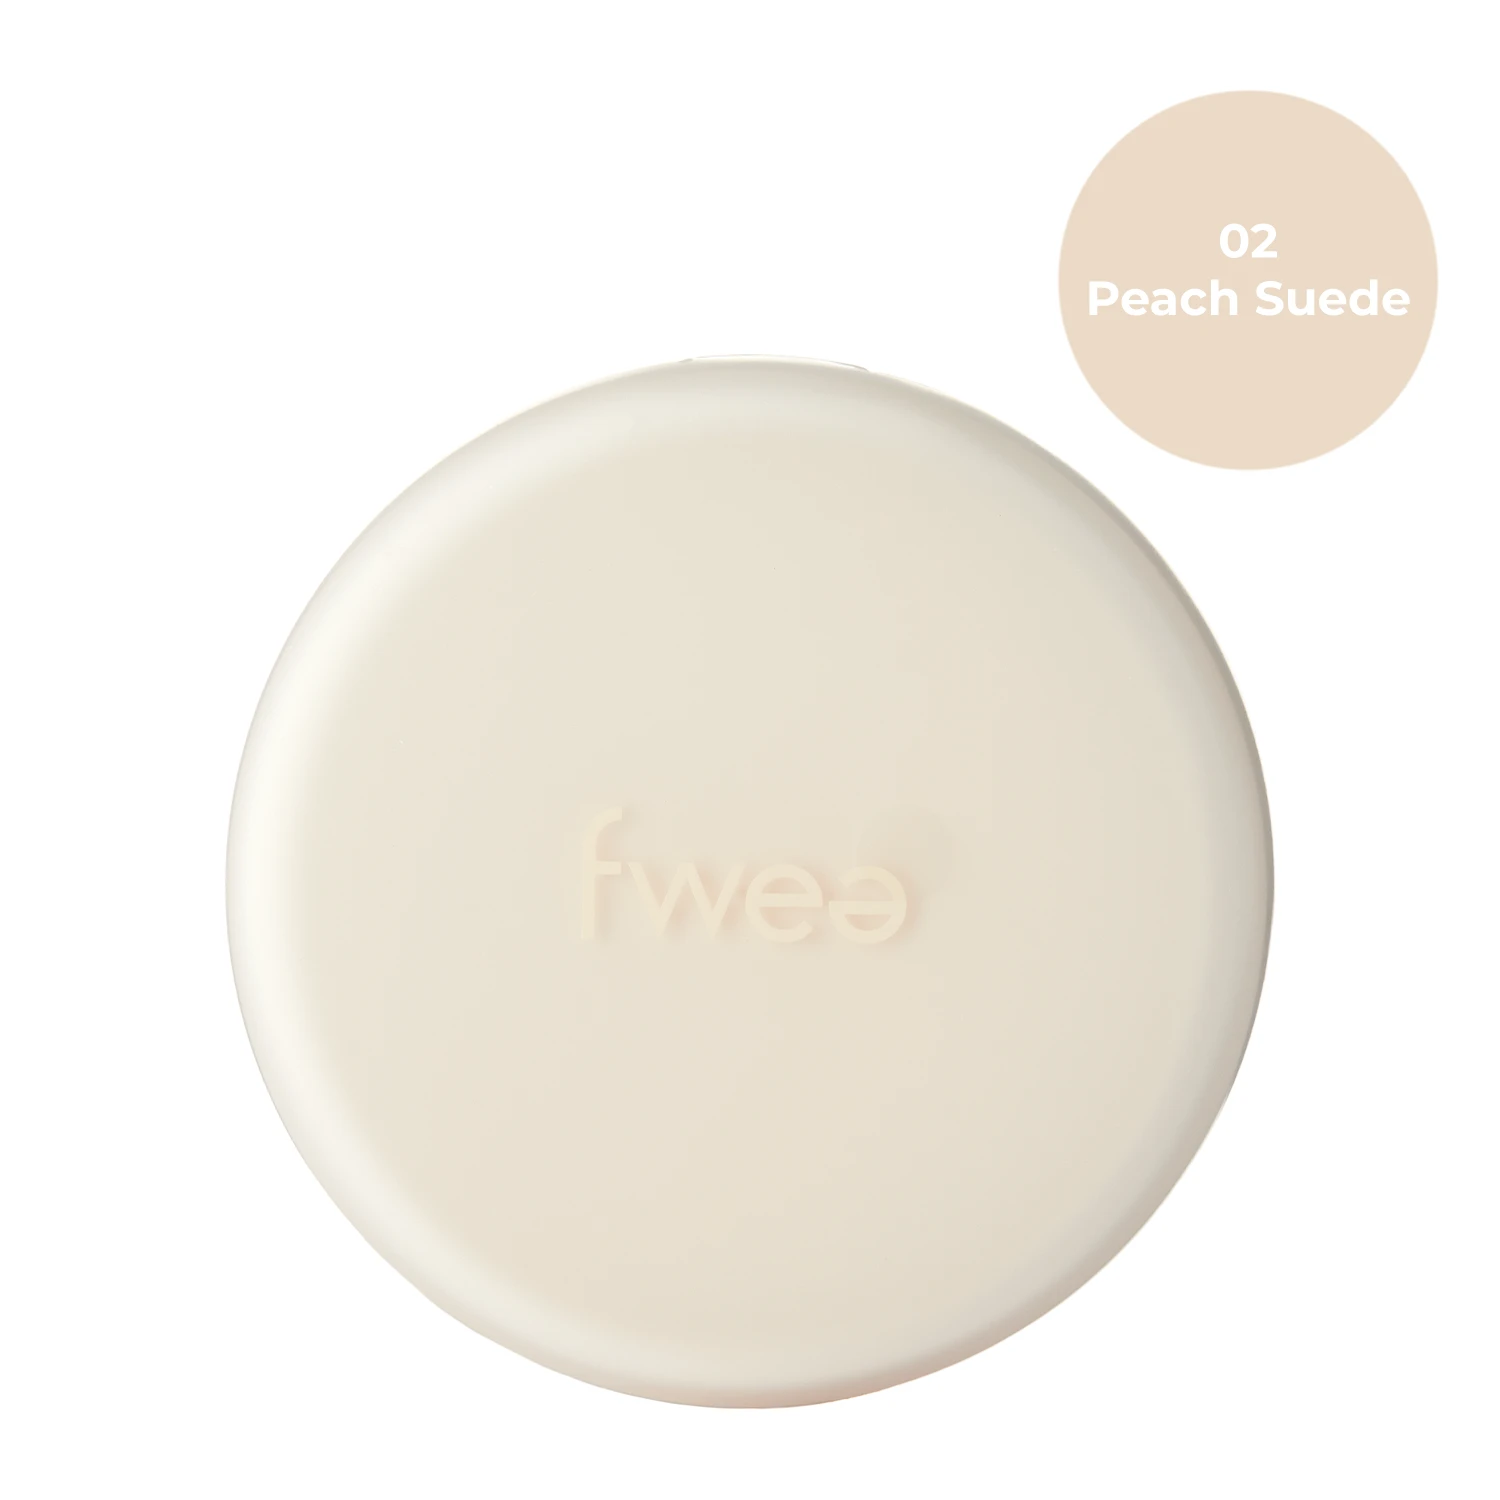 Fwee - Cushion Suede SPF50+ PA+++ - Зволожувальний тональний кушон для обличчя - 02 Peach Suede - 15g